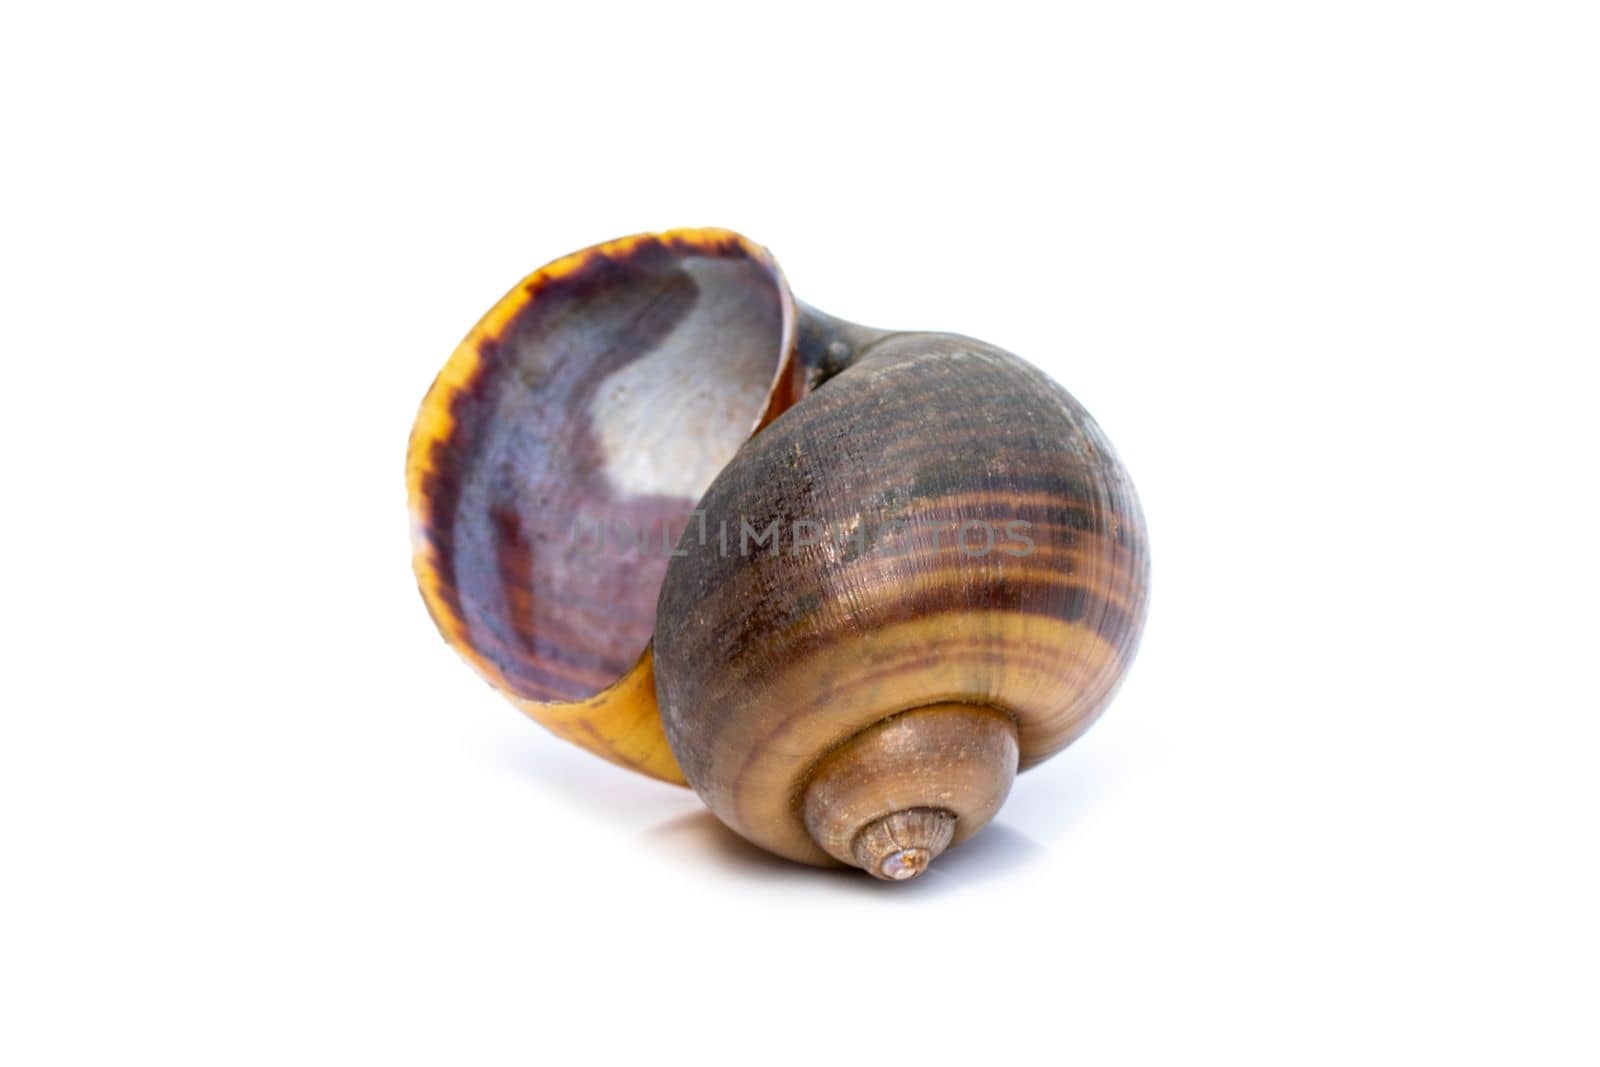 Image of apple snail (Pila ampullacea) isolated on white background. Animal.